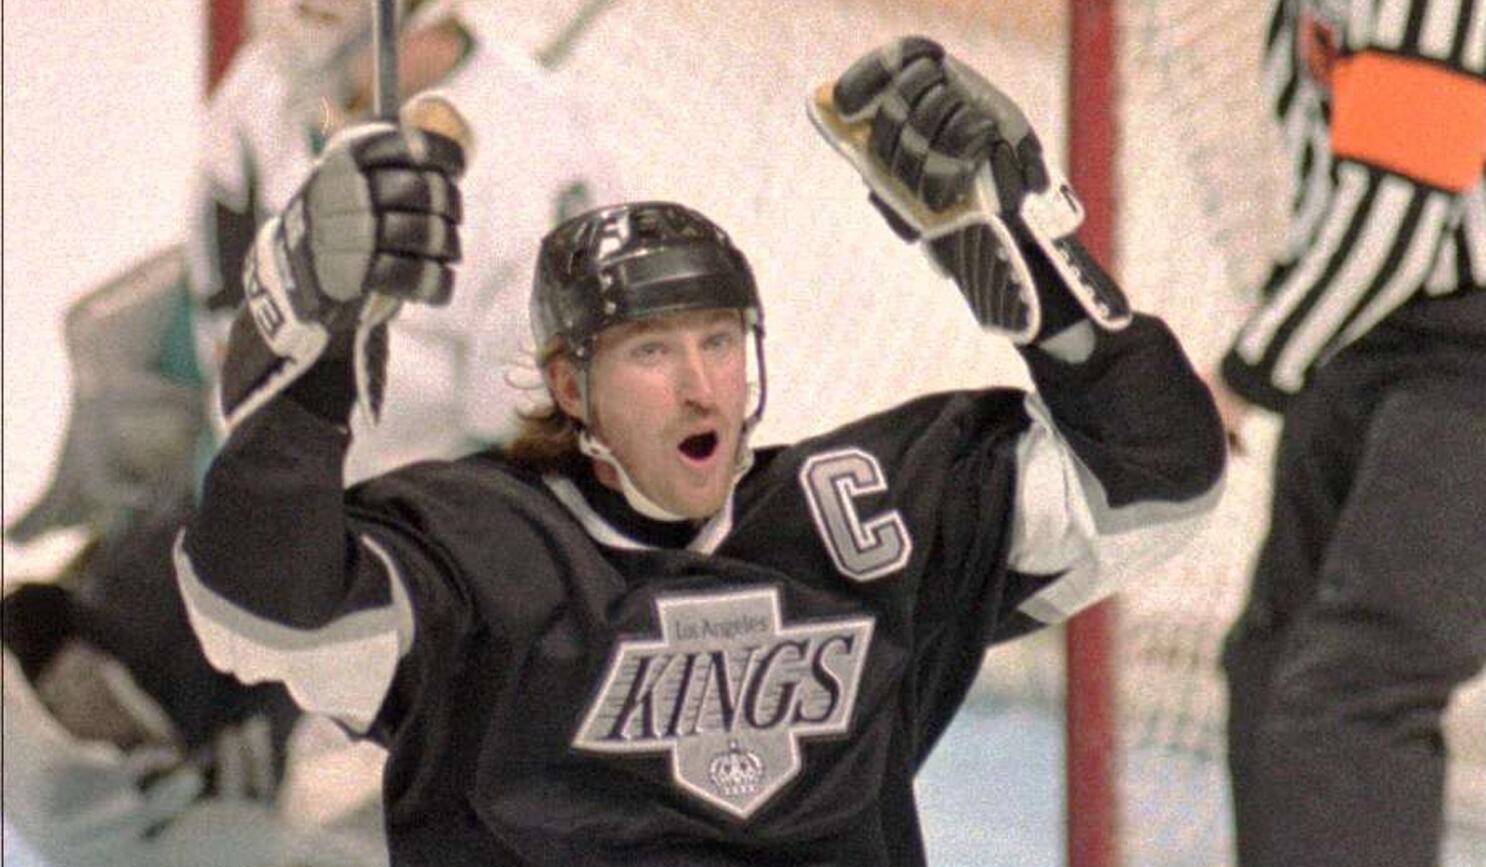 Wayne Gretzky 1994 NHL All Star Game Jersey Large